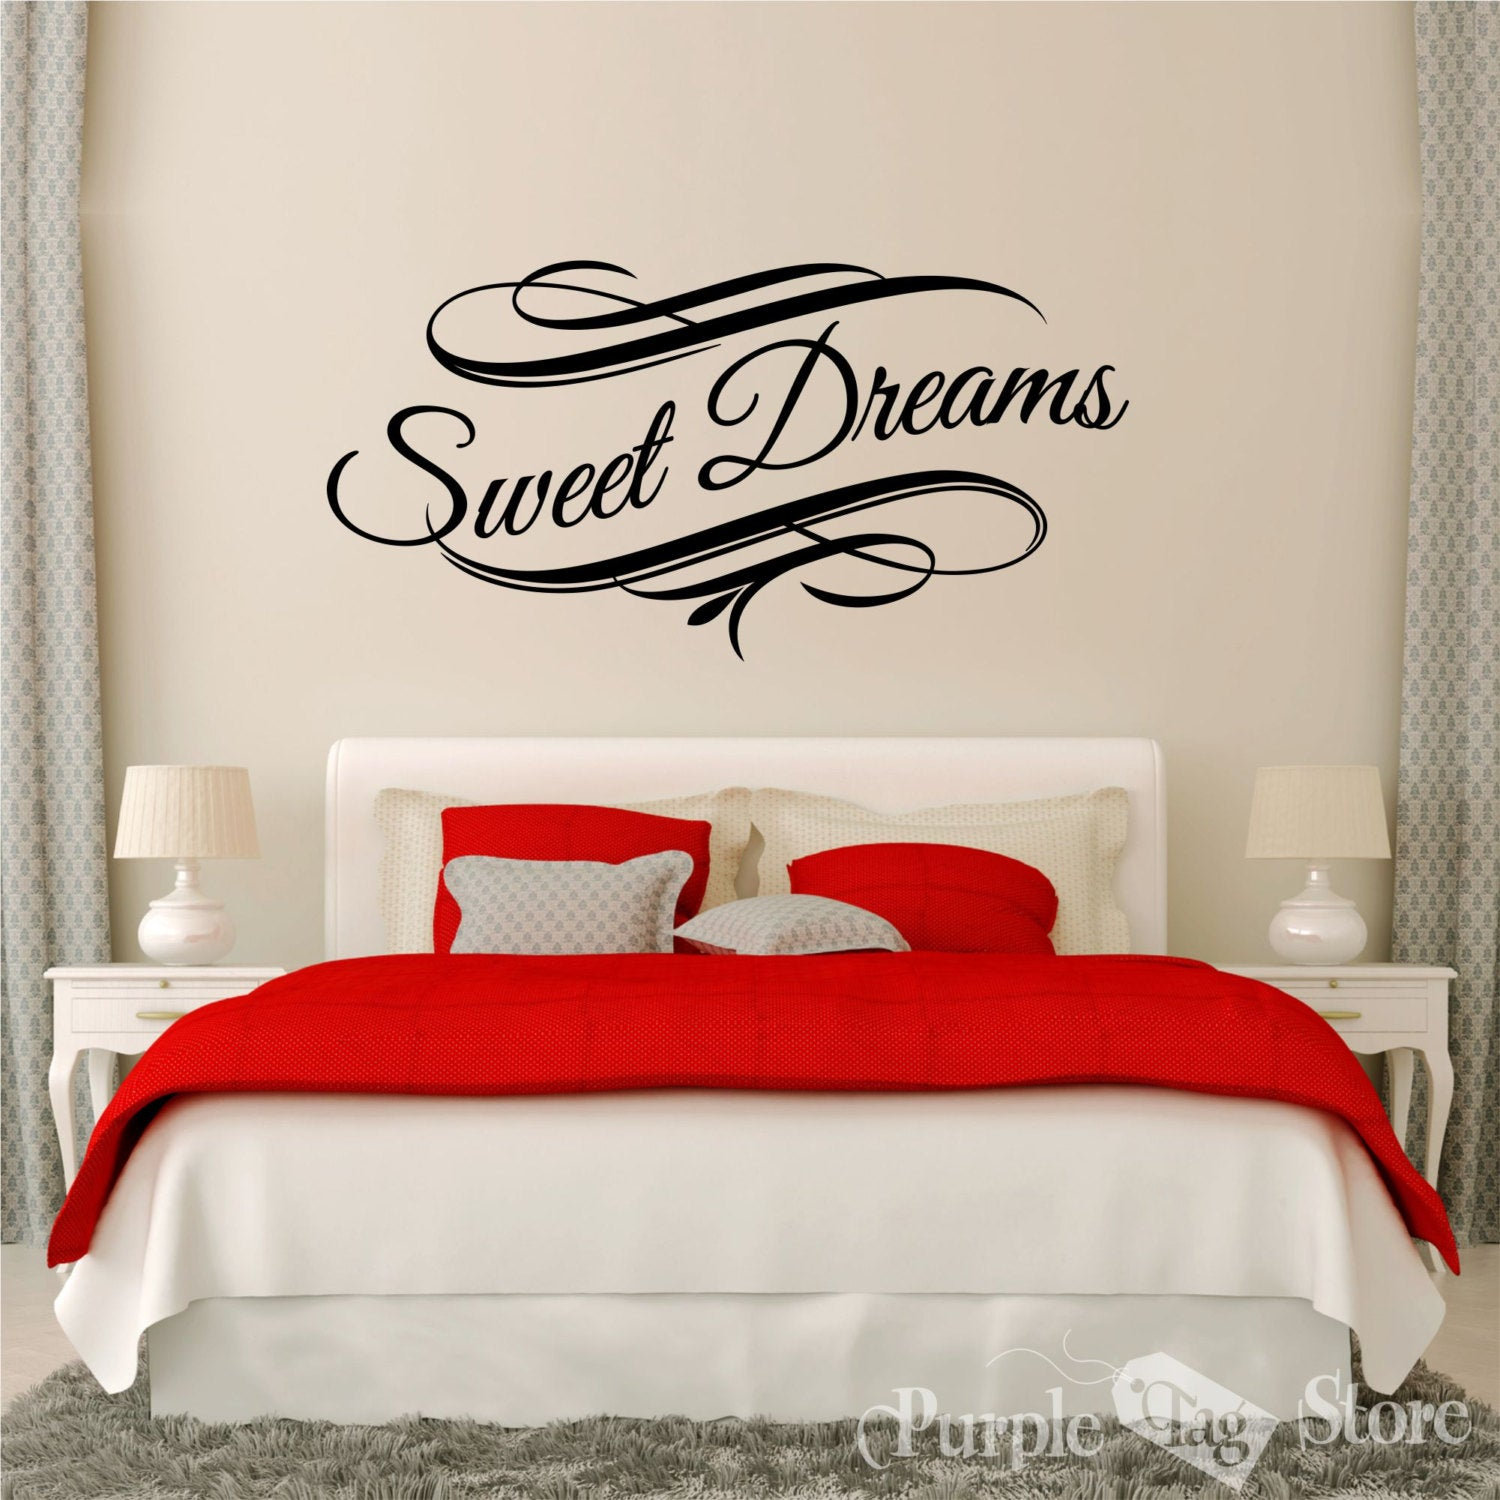 SWEET DREAMS GIRLS VINYL WALL ART BEDROOM DECOR STICKER HOME WALL LETTERING 